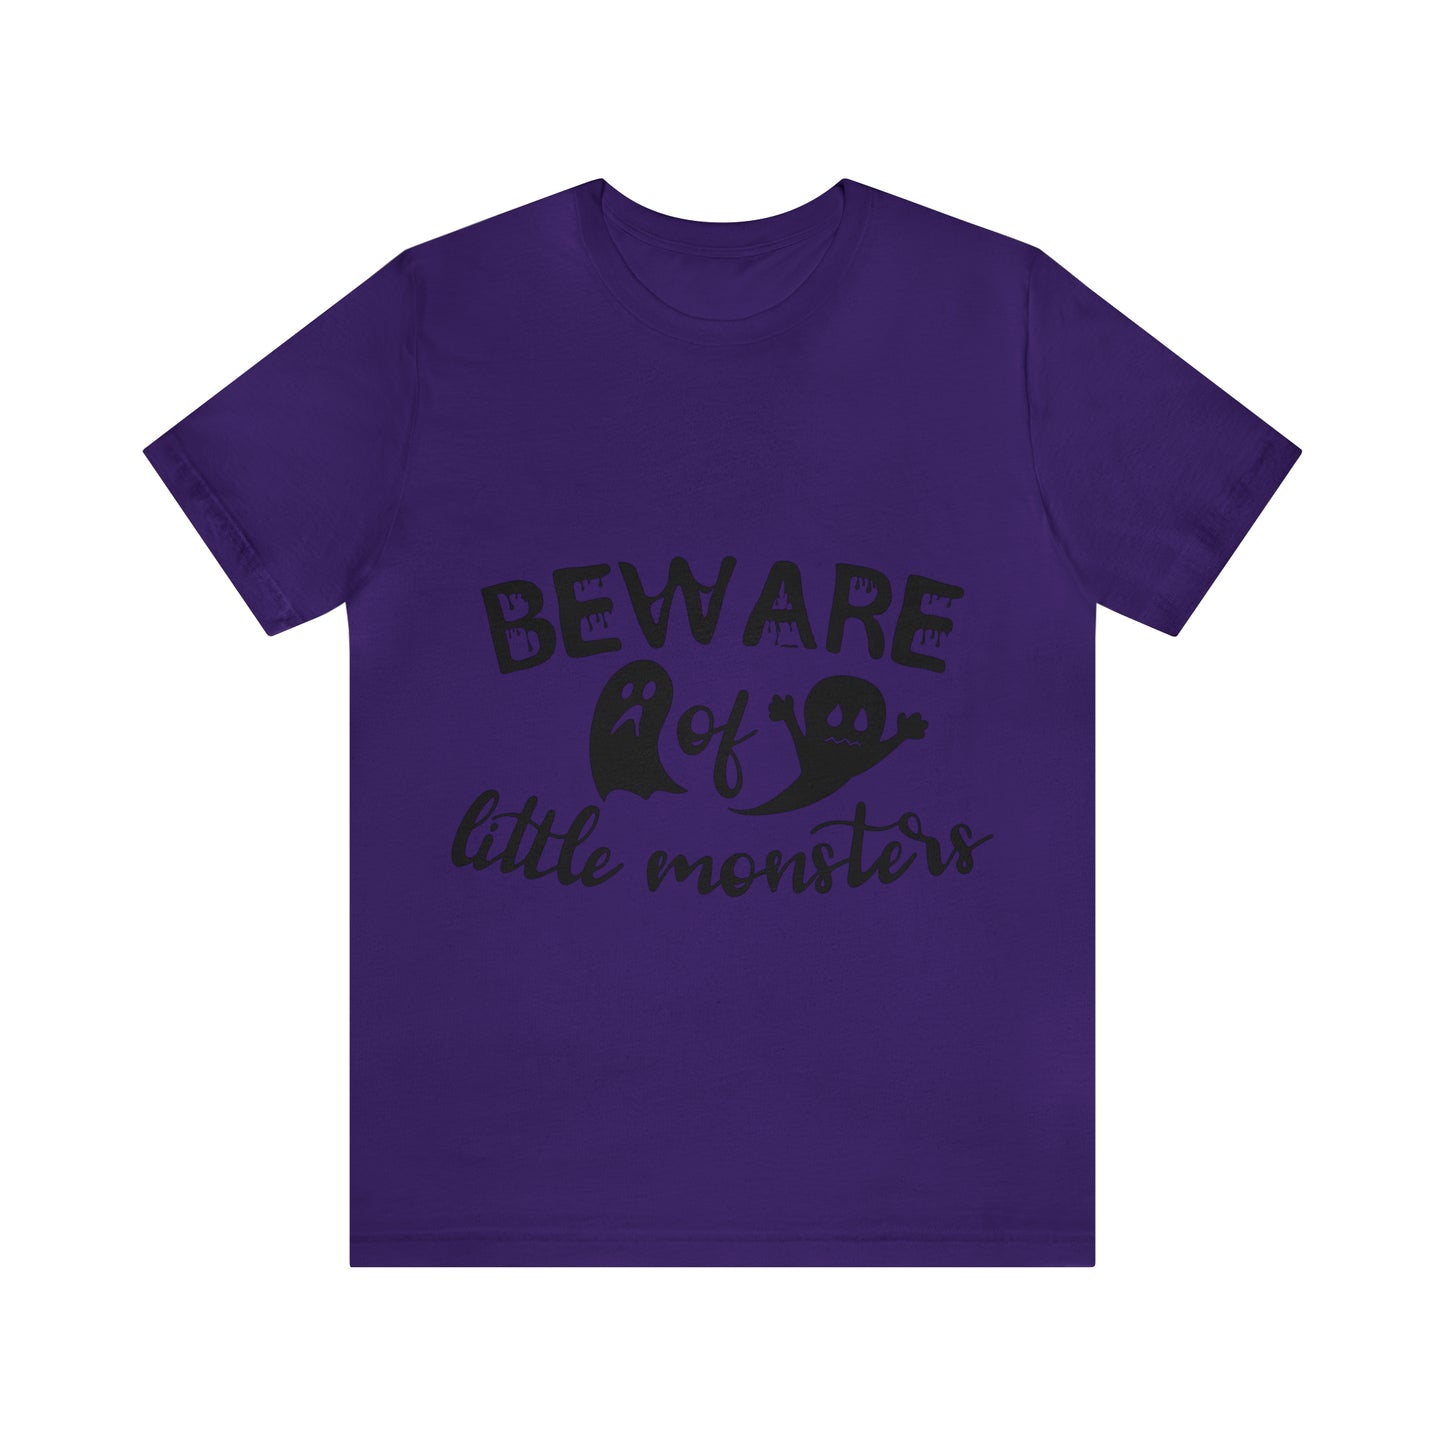 Beware Of Little Monsters - Unisex T-Shirt